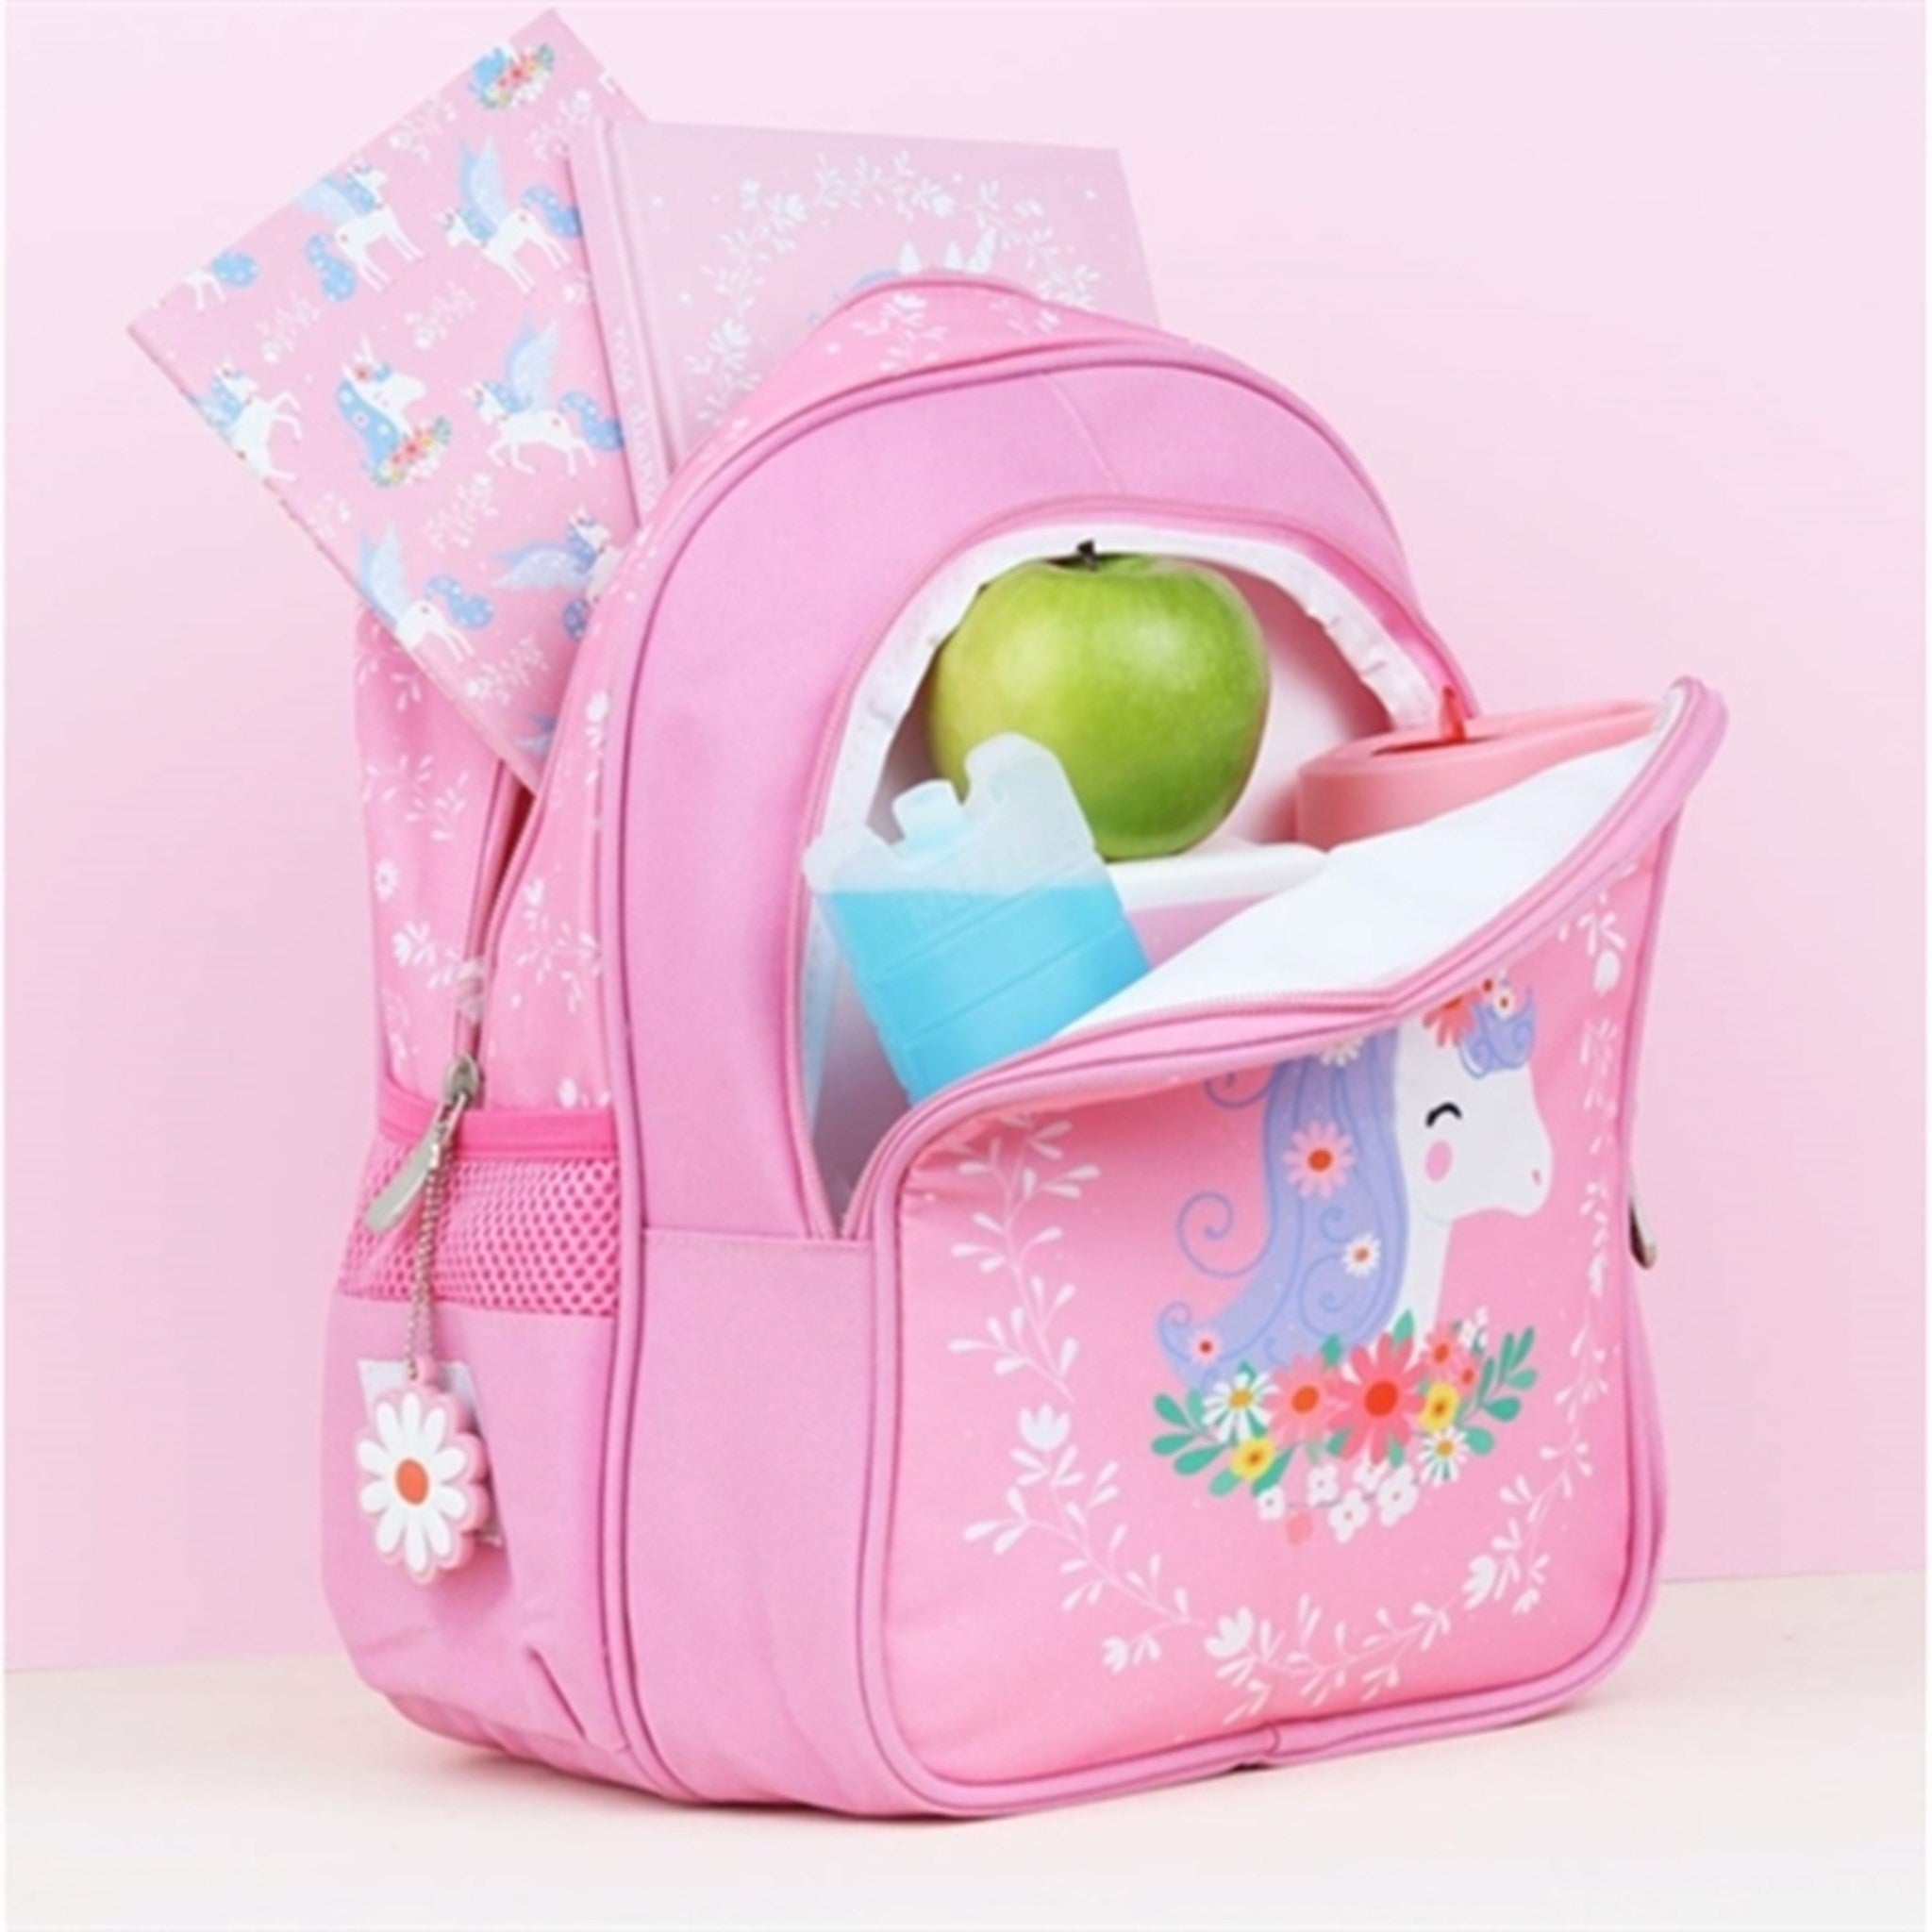 A Little Lovely Company Backpack Unicorn 2